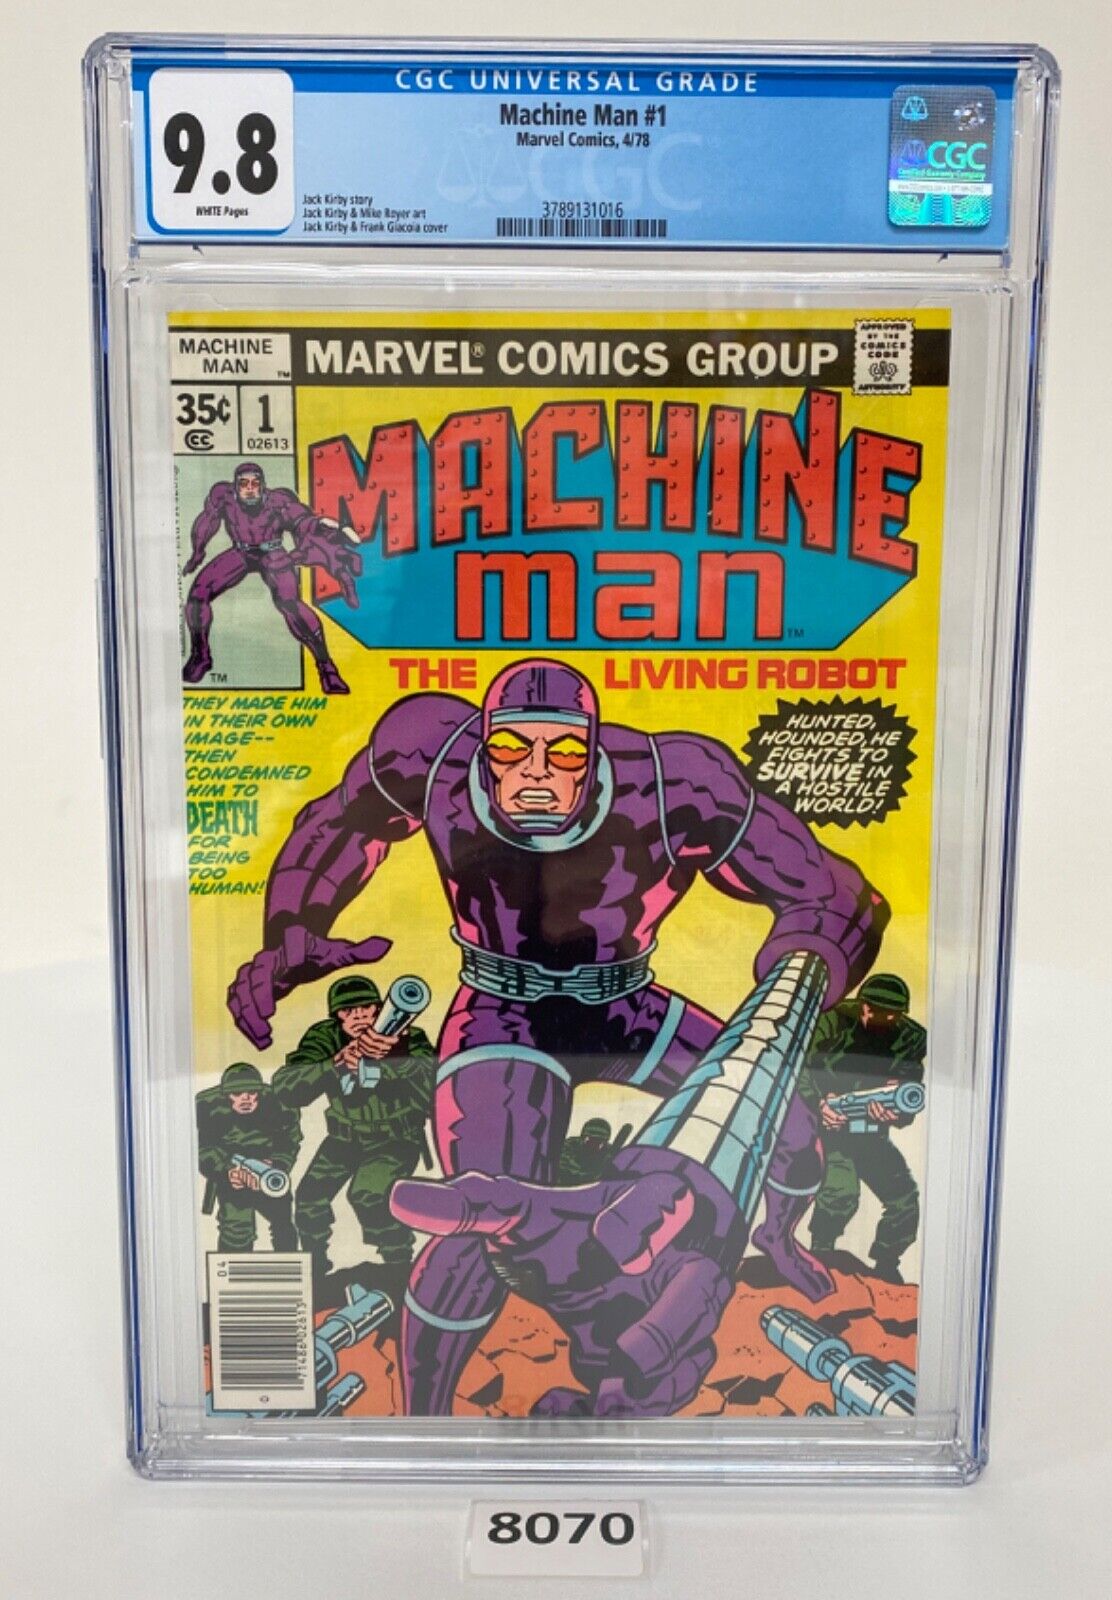 Machine Man #1 Marvel Comics 1978 CGC 9.8 White Pages